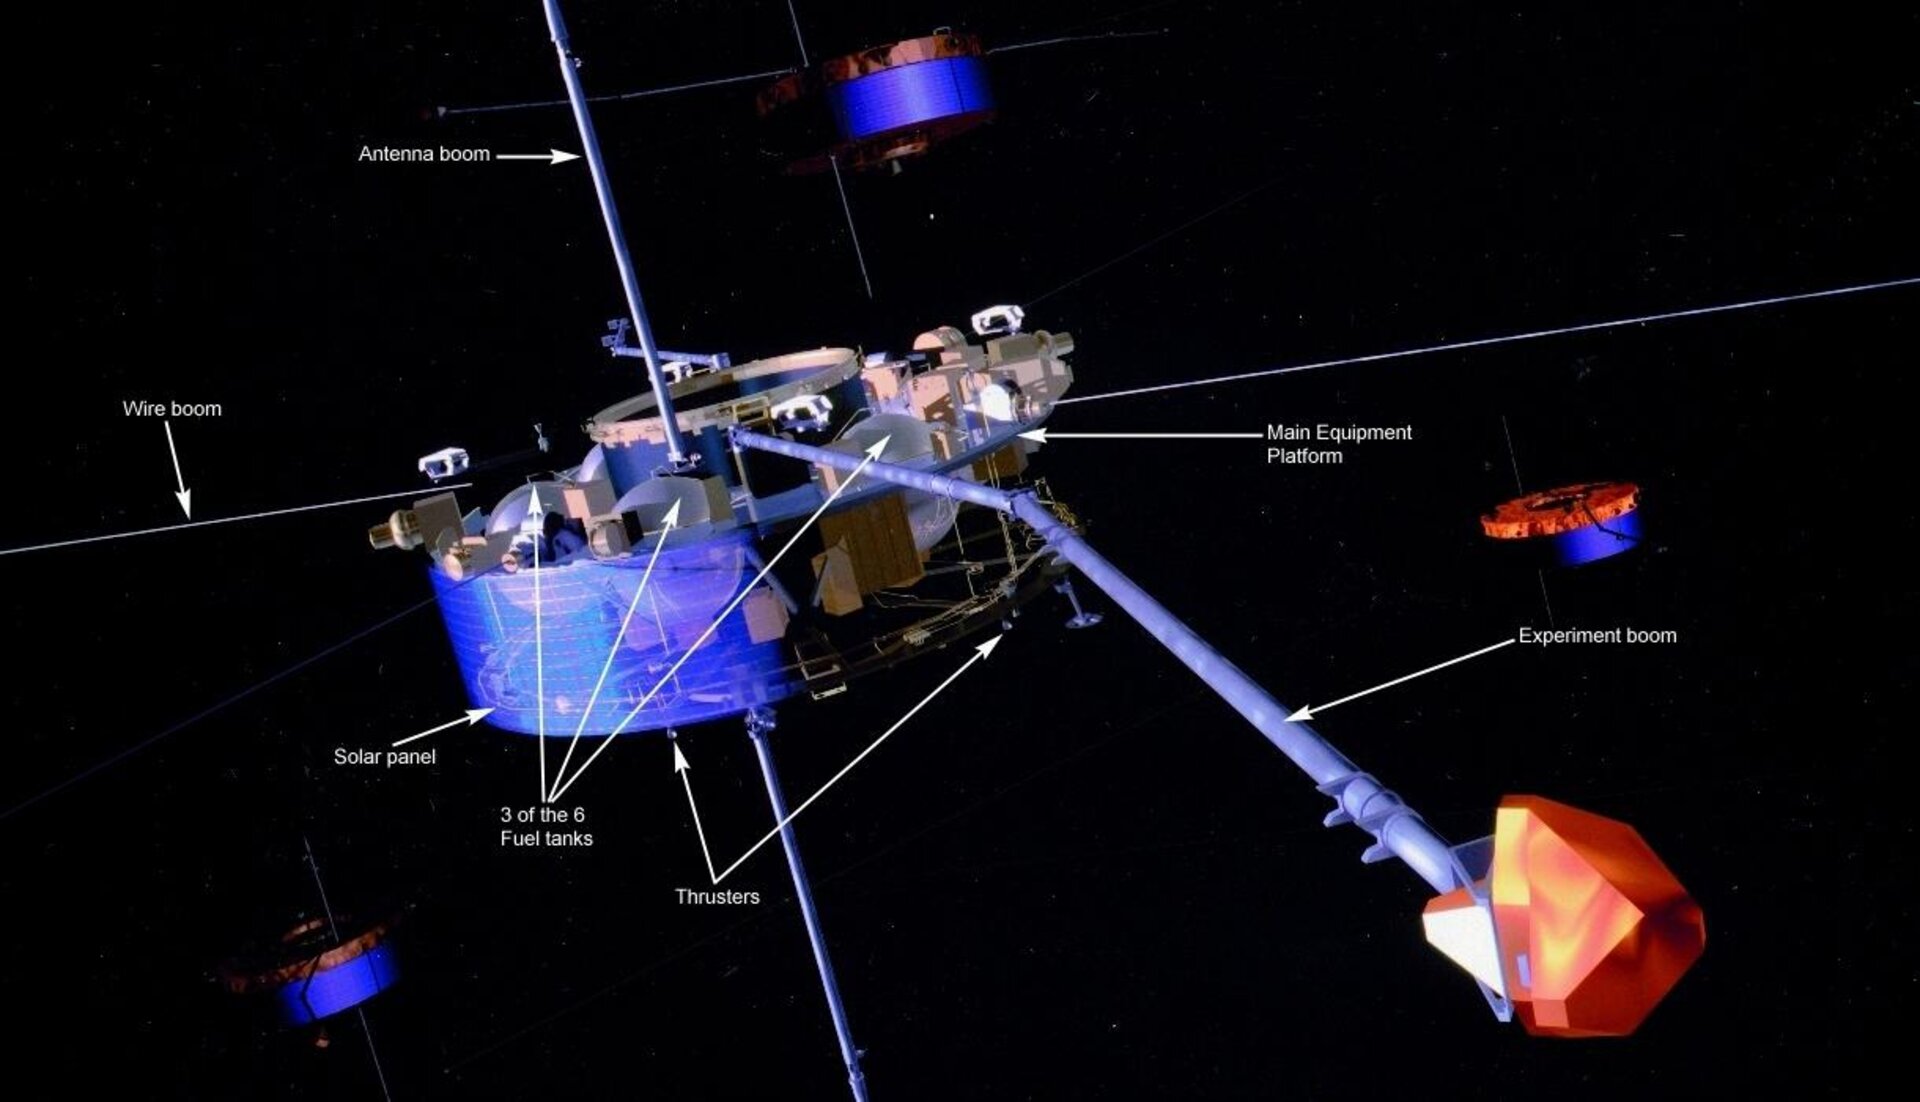 Cutaway diagram of a Cluster spacecraft